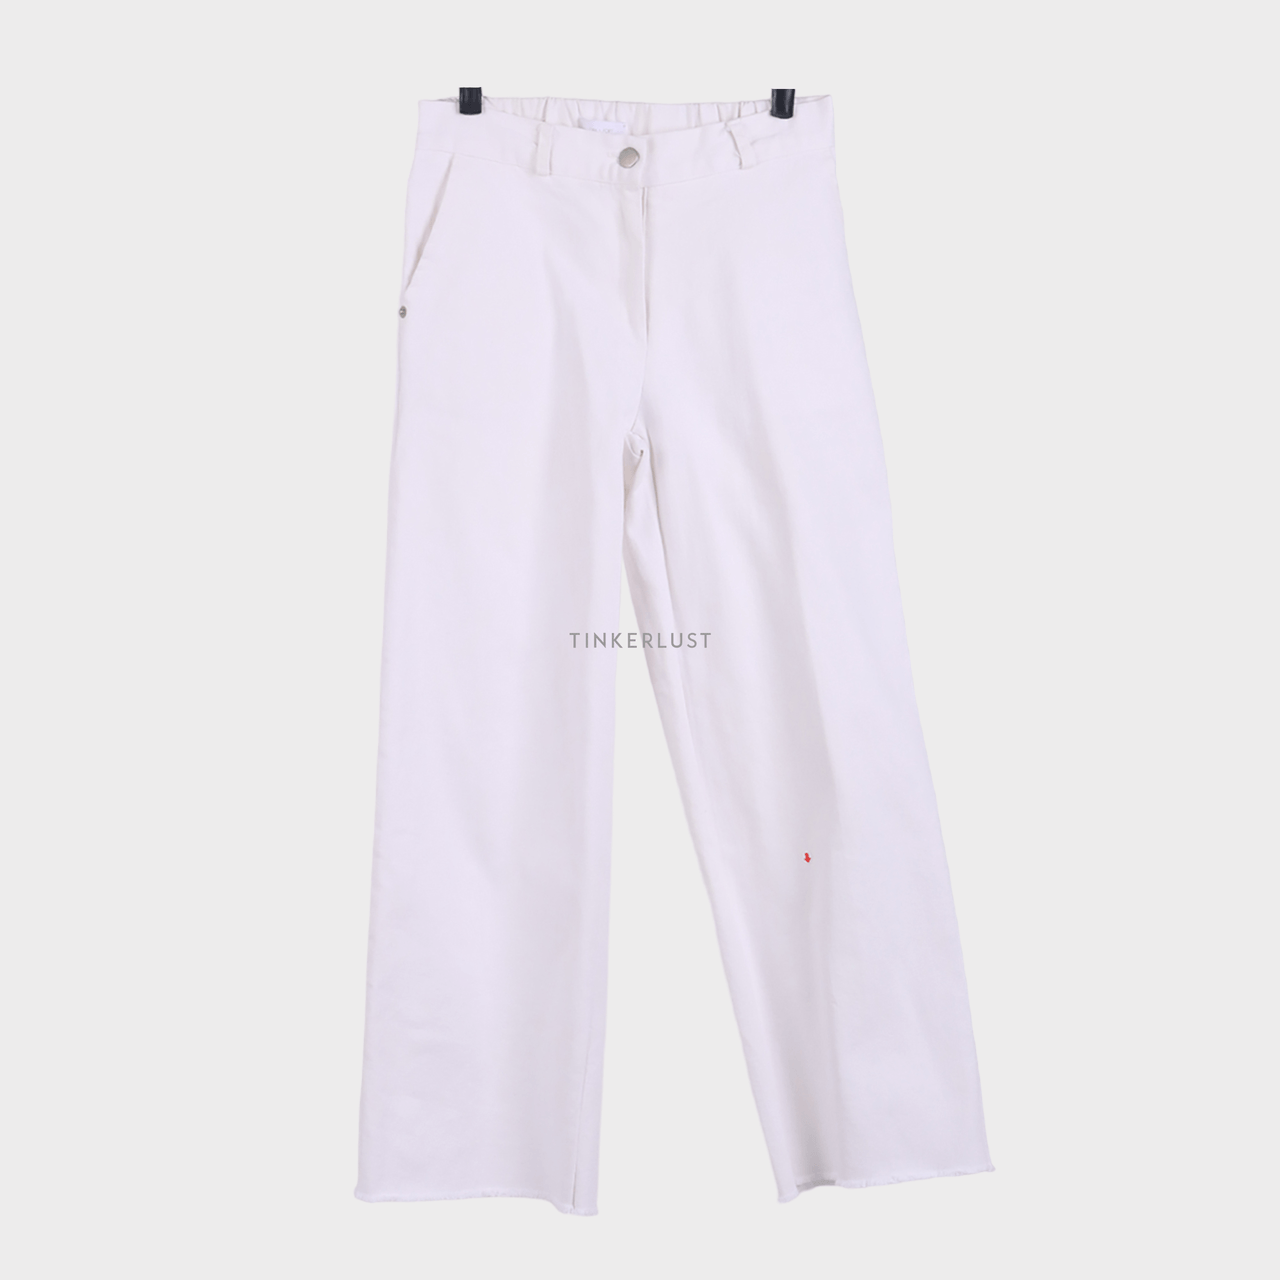 Oak + Fort White Long Pants